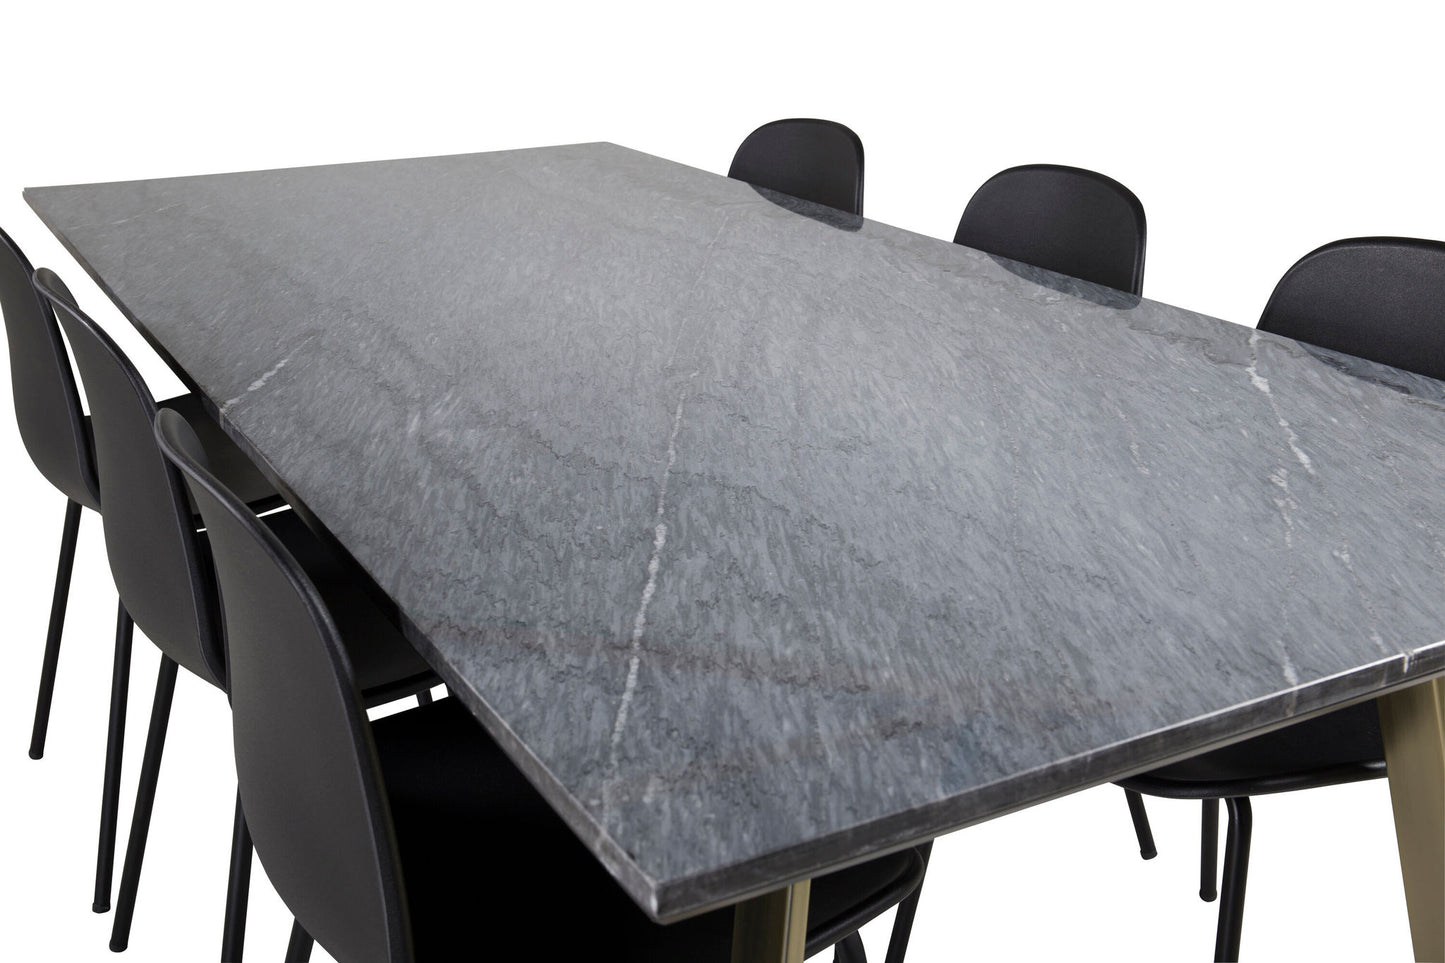 Estelle - Spisebord, 200*90*H76 - Grå / Messing+Arctic Spisebordsstol - Sorte ben - Sort Plast